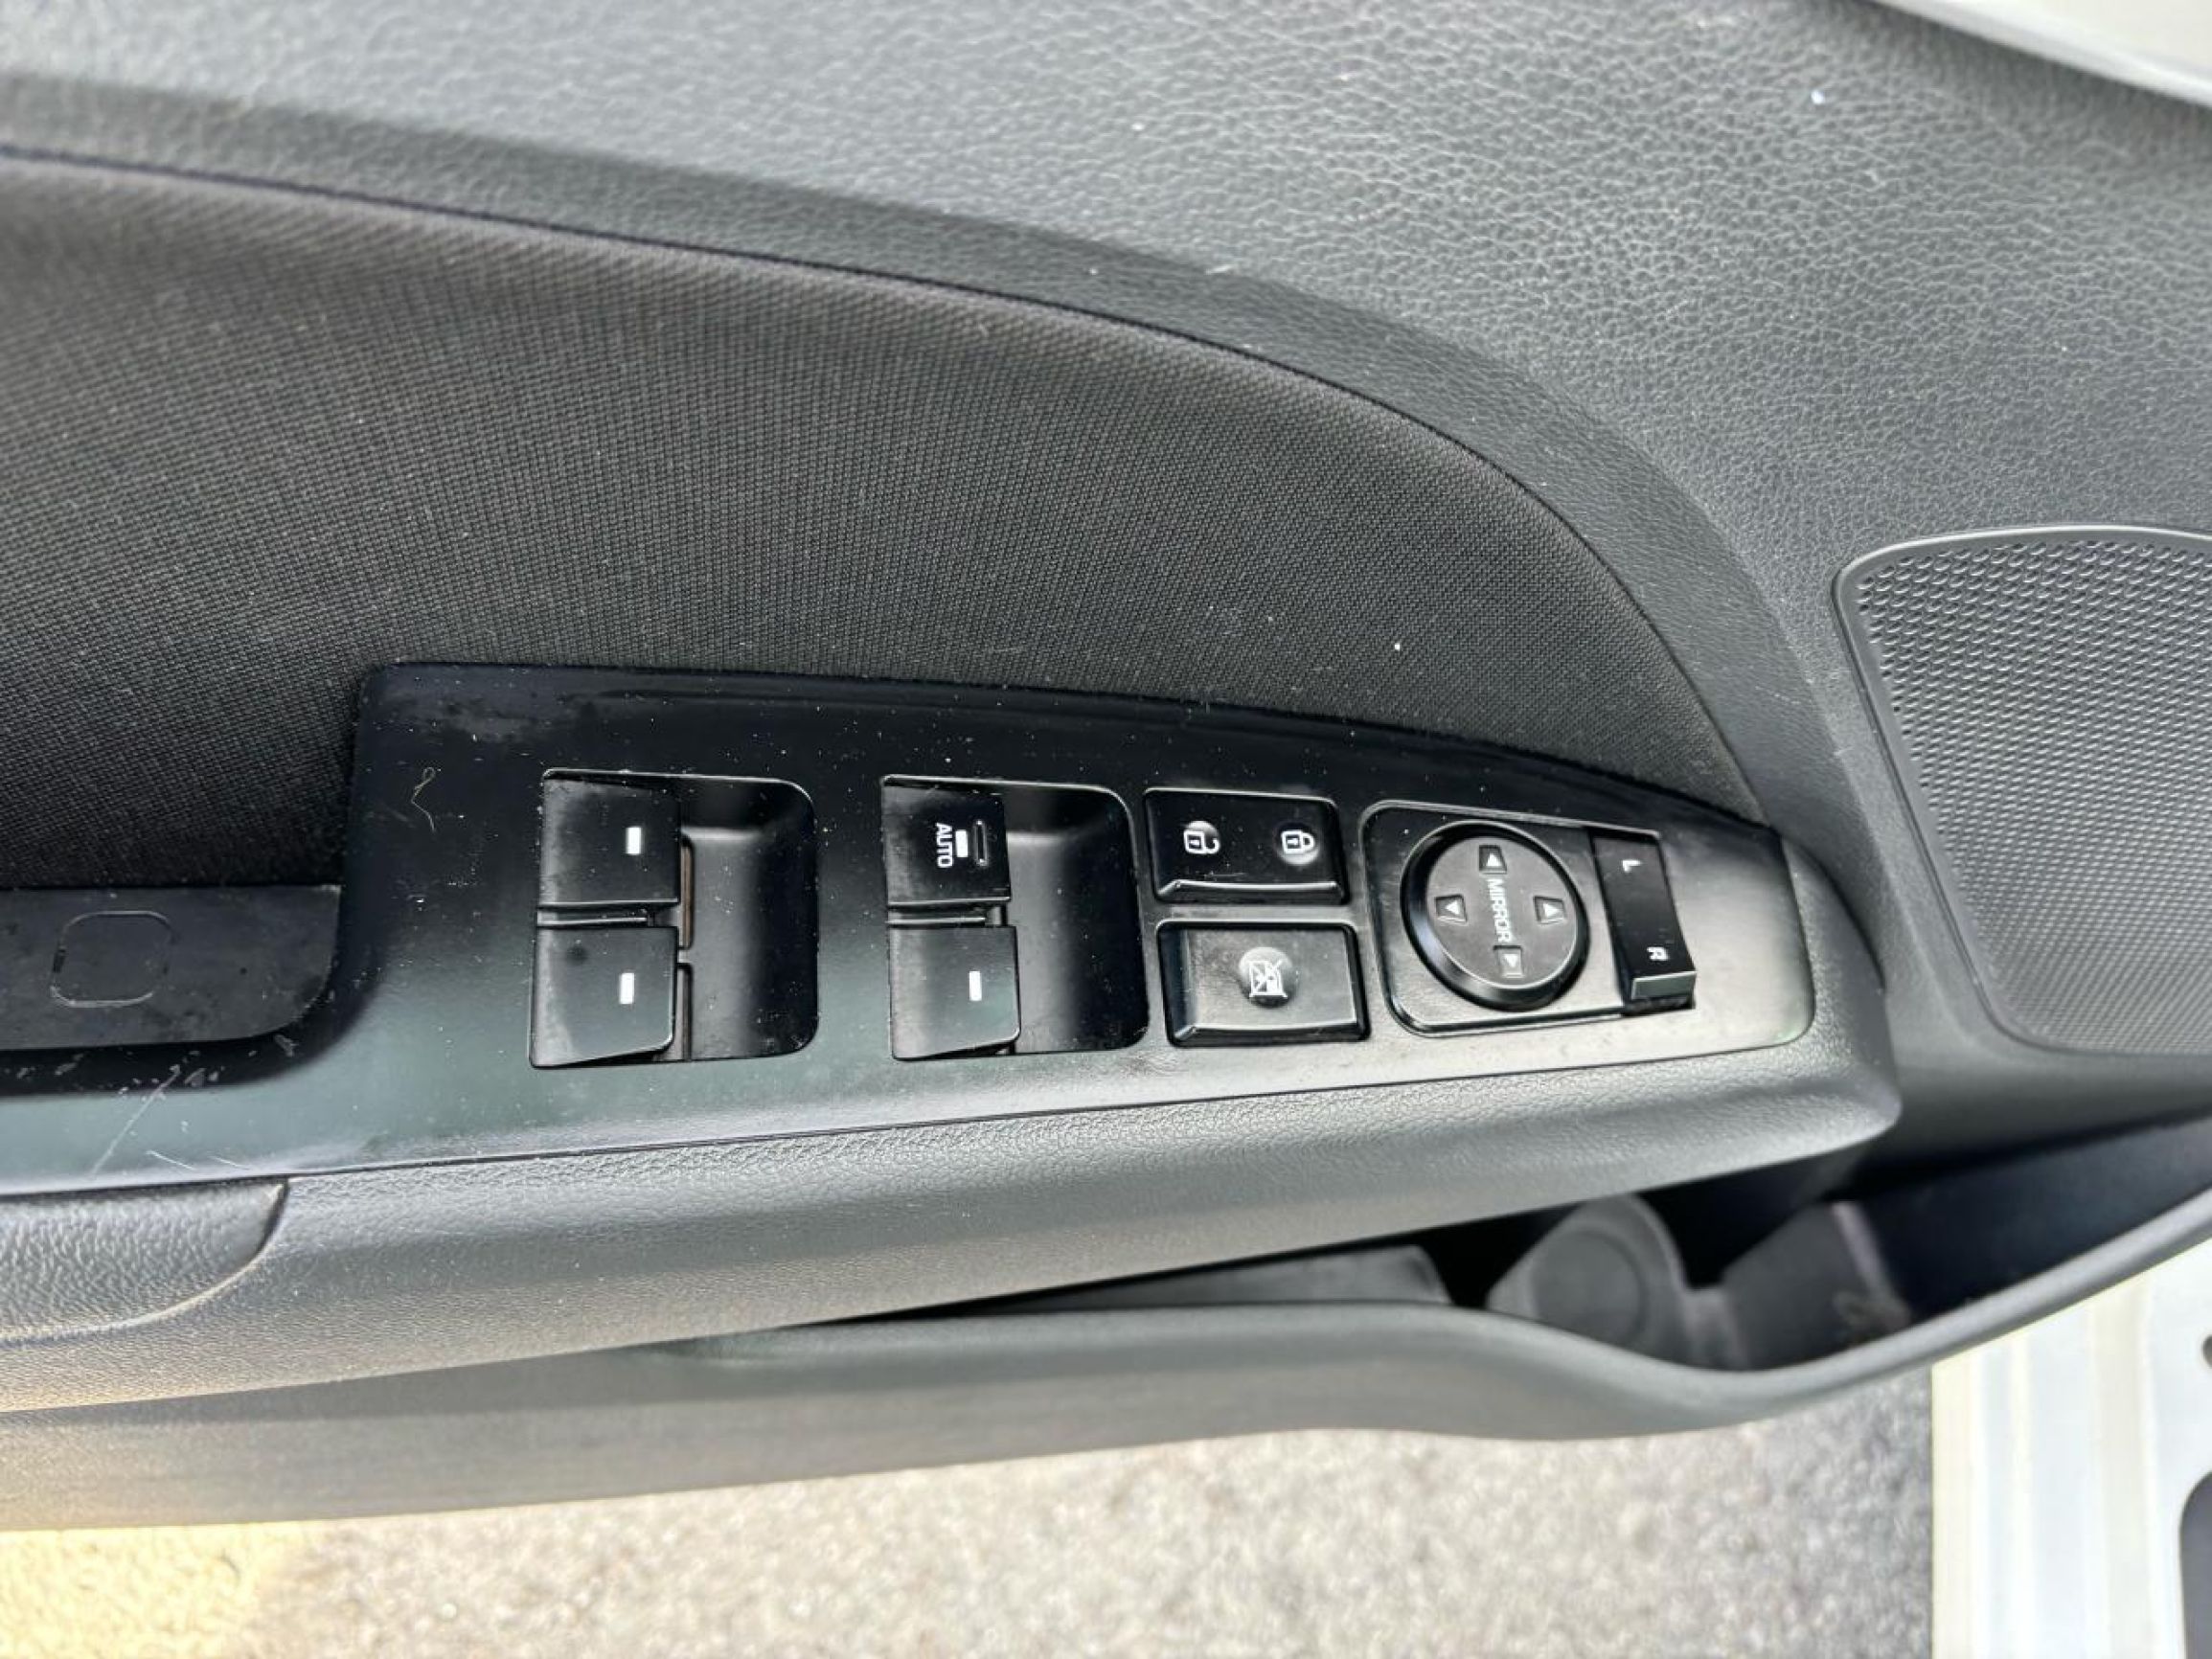 2019 Hyundai Elantra Preferred, 6 Speed Manual Transmission,Back-Up Cam